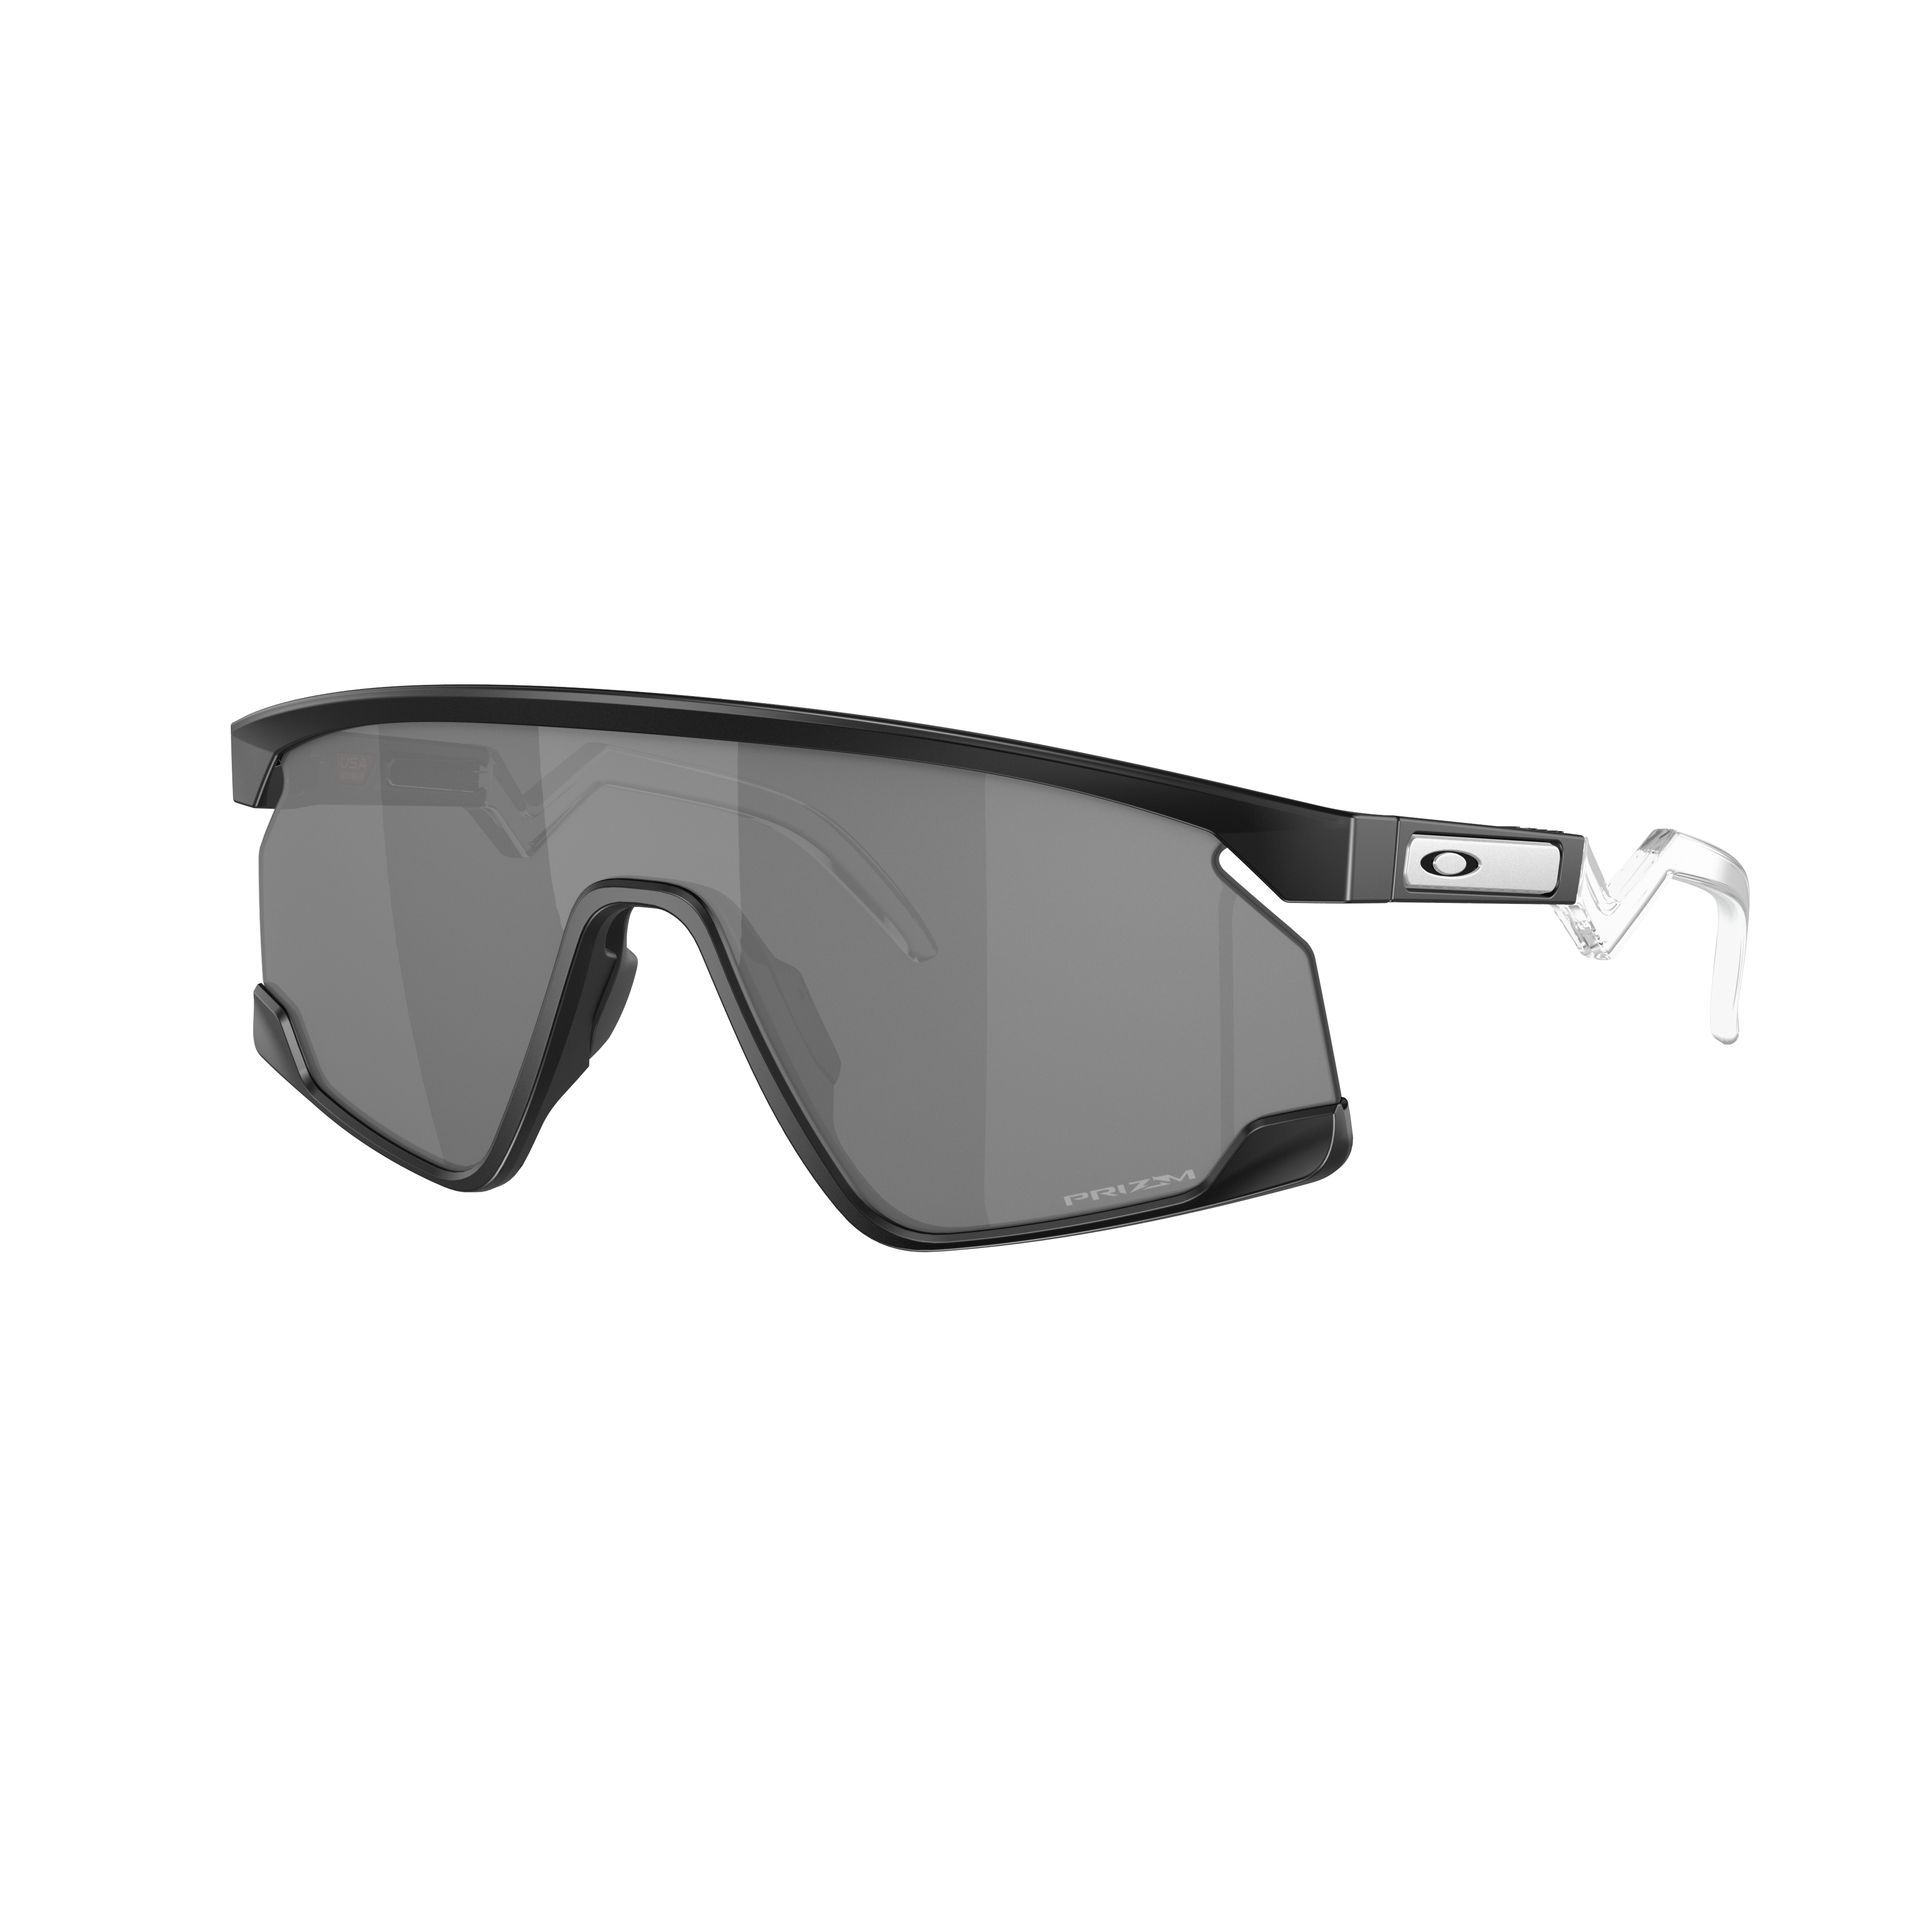 0OO9280 Mask Sunglasses 928001 - size 39